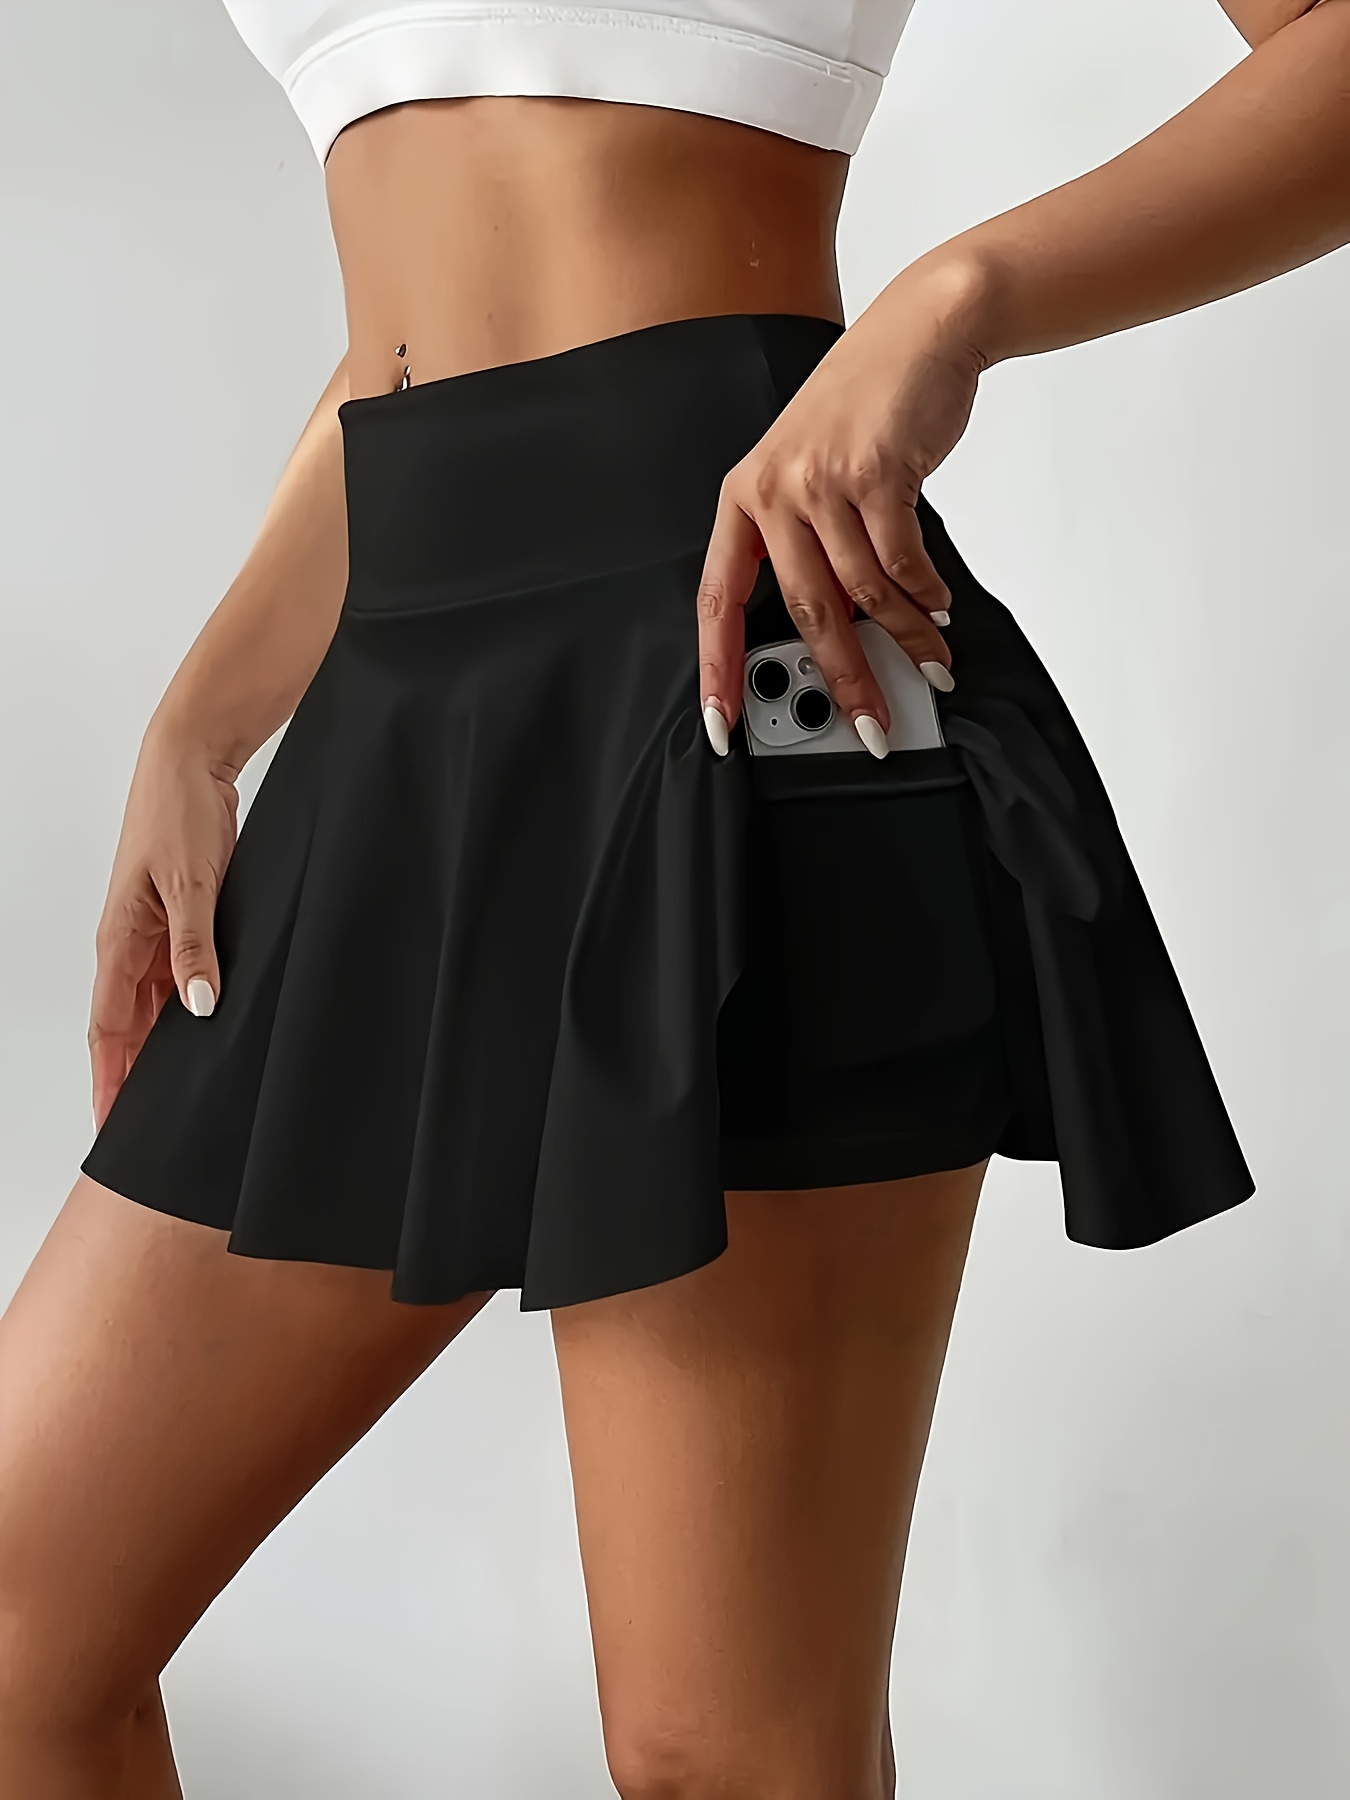 Toumett Women's Tennis Skirts Lightweight Pleated Athletic Skorts Sports  Golf Running Mini Skirt with Pockets and Shorts 011-black Small